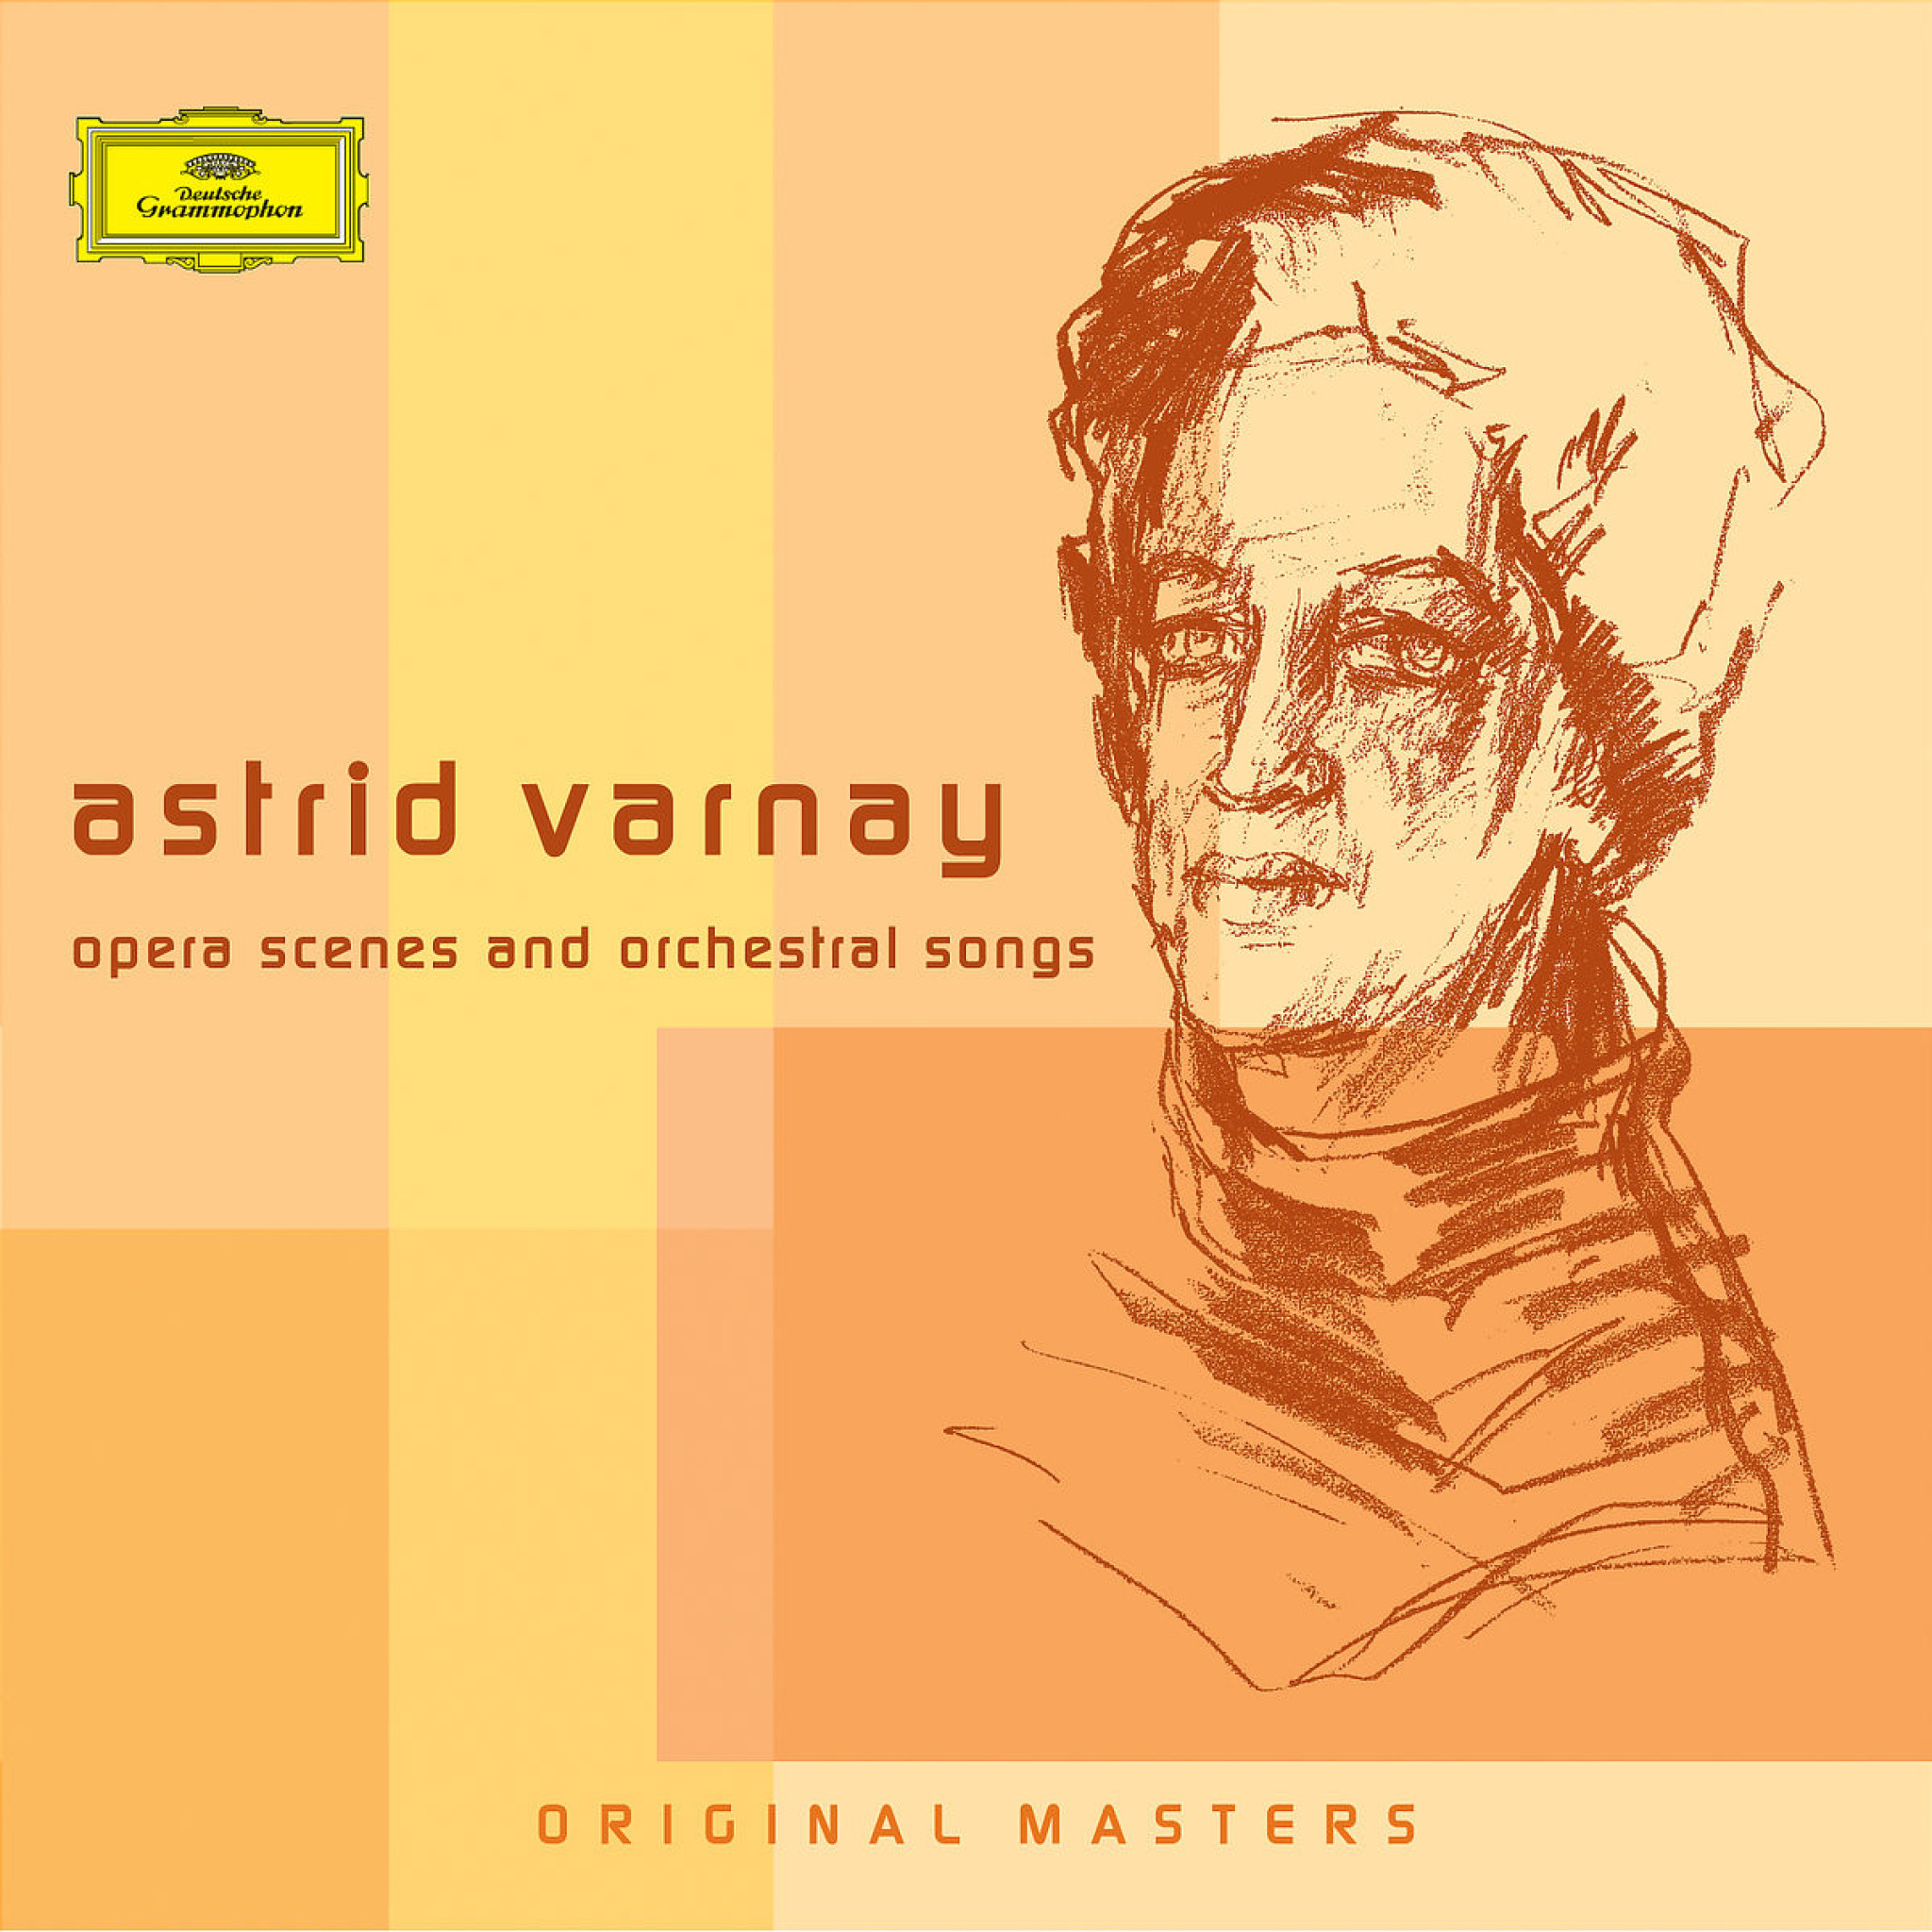 Wagner, Beethoven, Verdi: Astrid Varnay - Complete Opera Scenes and Orchestral Songs on DG 0028947441025